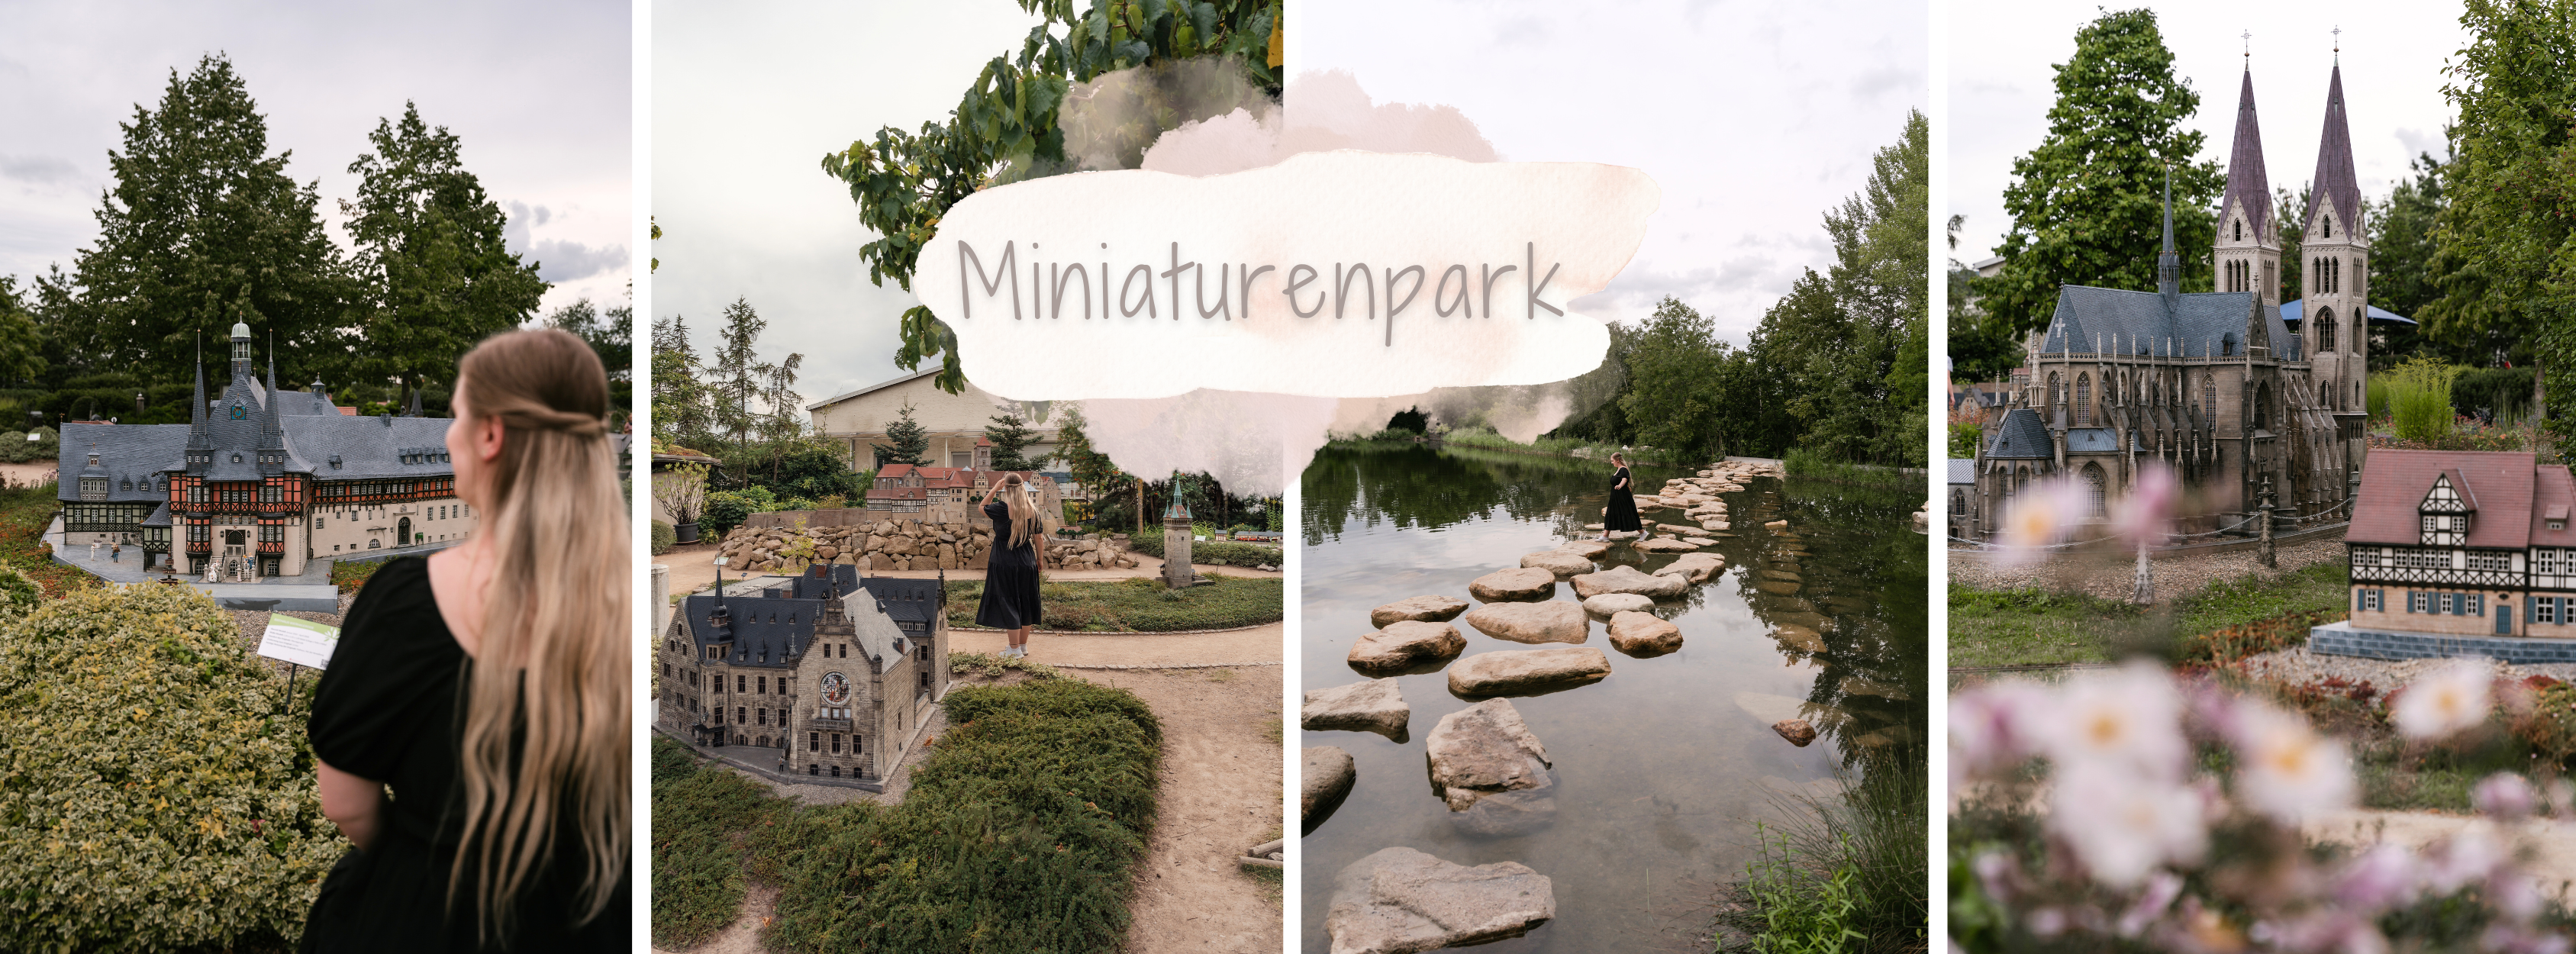 Miniaturenpark Wernigerode Header